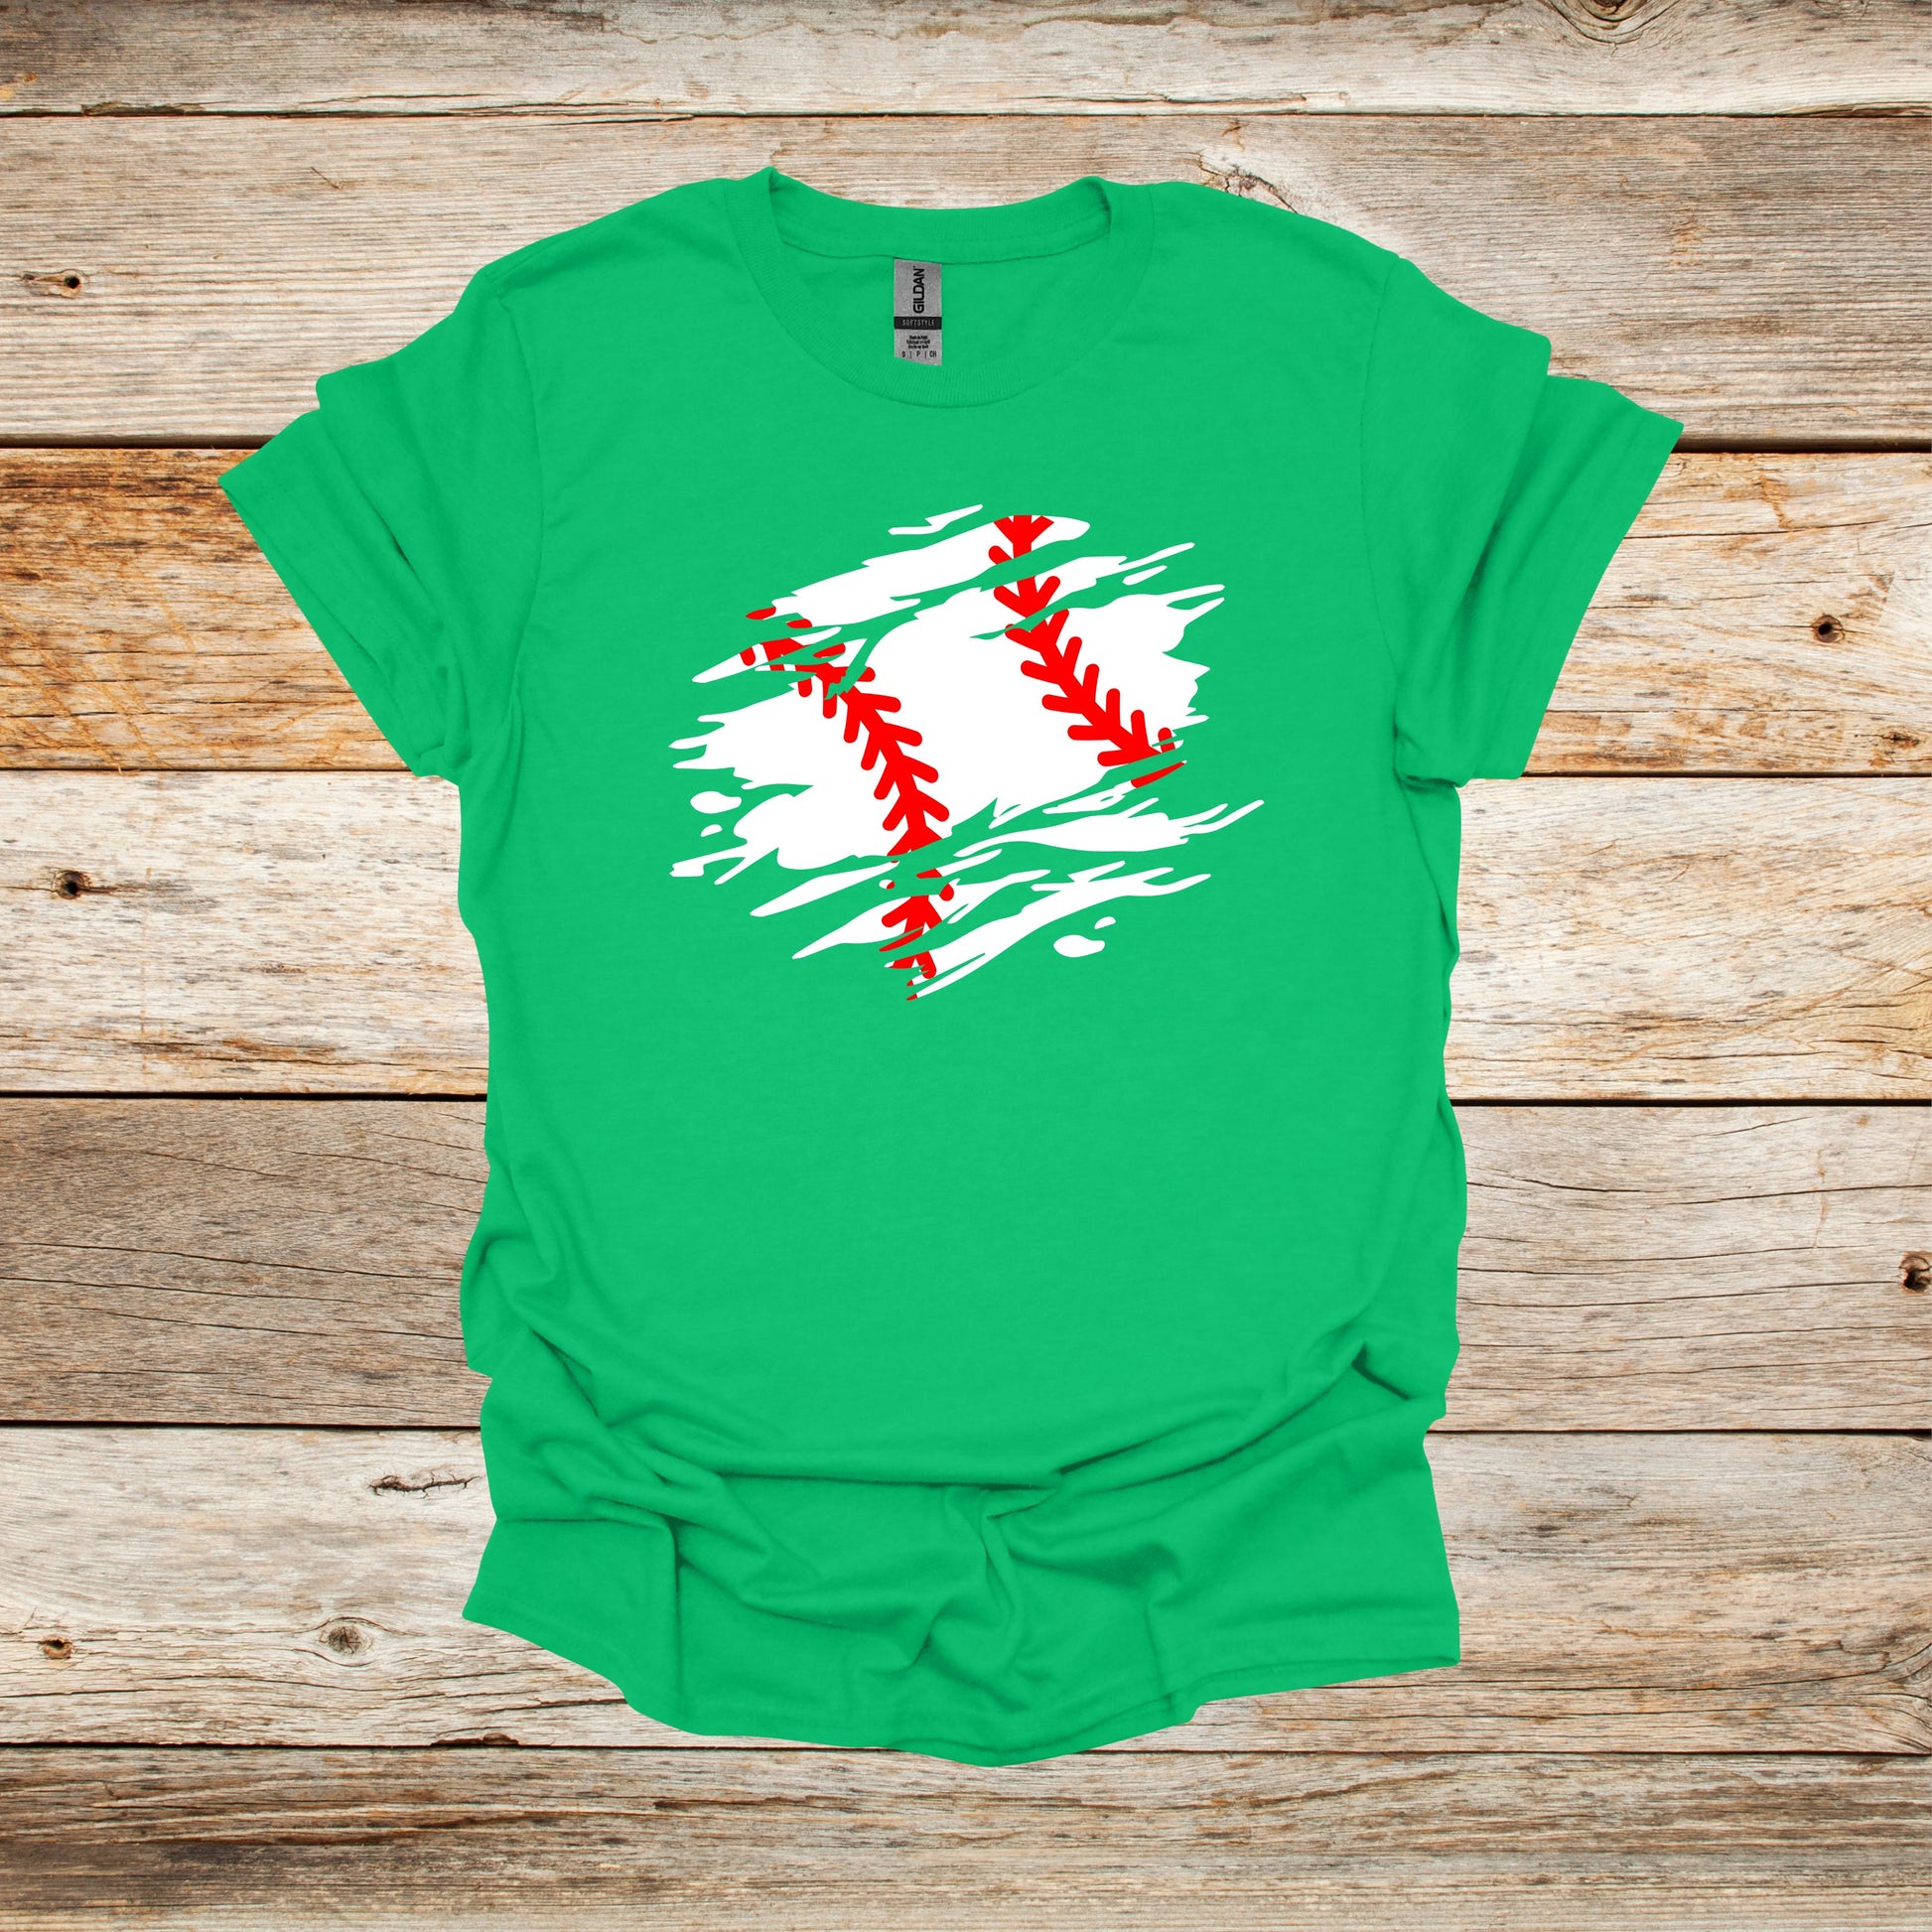 Baseball T-Shirt - Adult and Children's Tee Shirts - Sports T-Shirts Graphic Avenue Irish Green Adult Small 